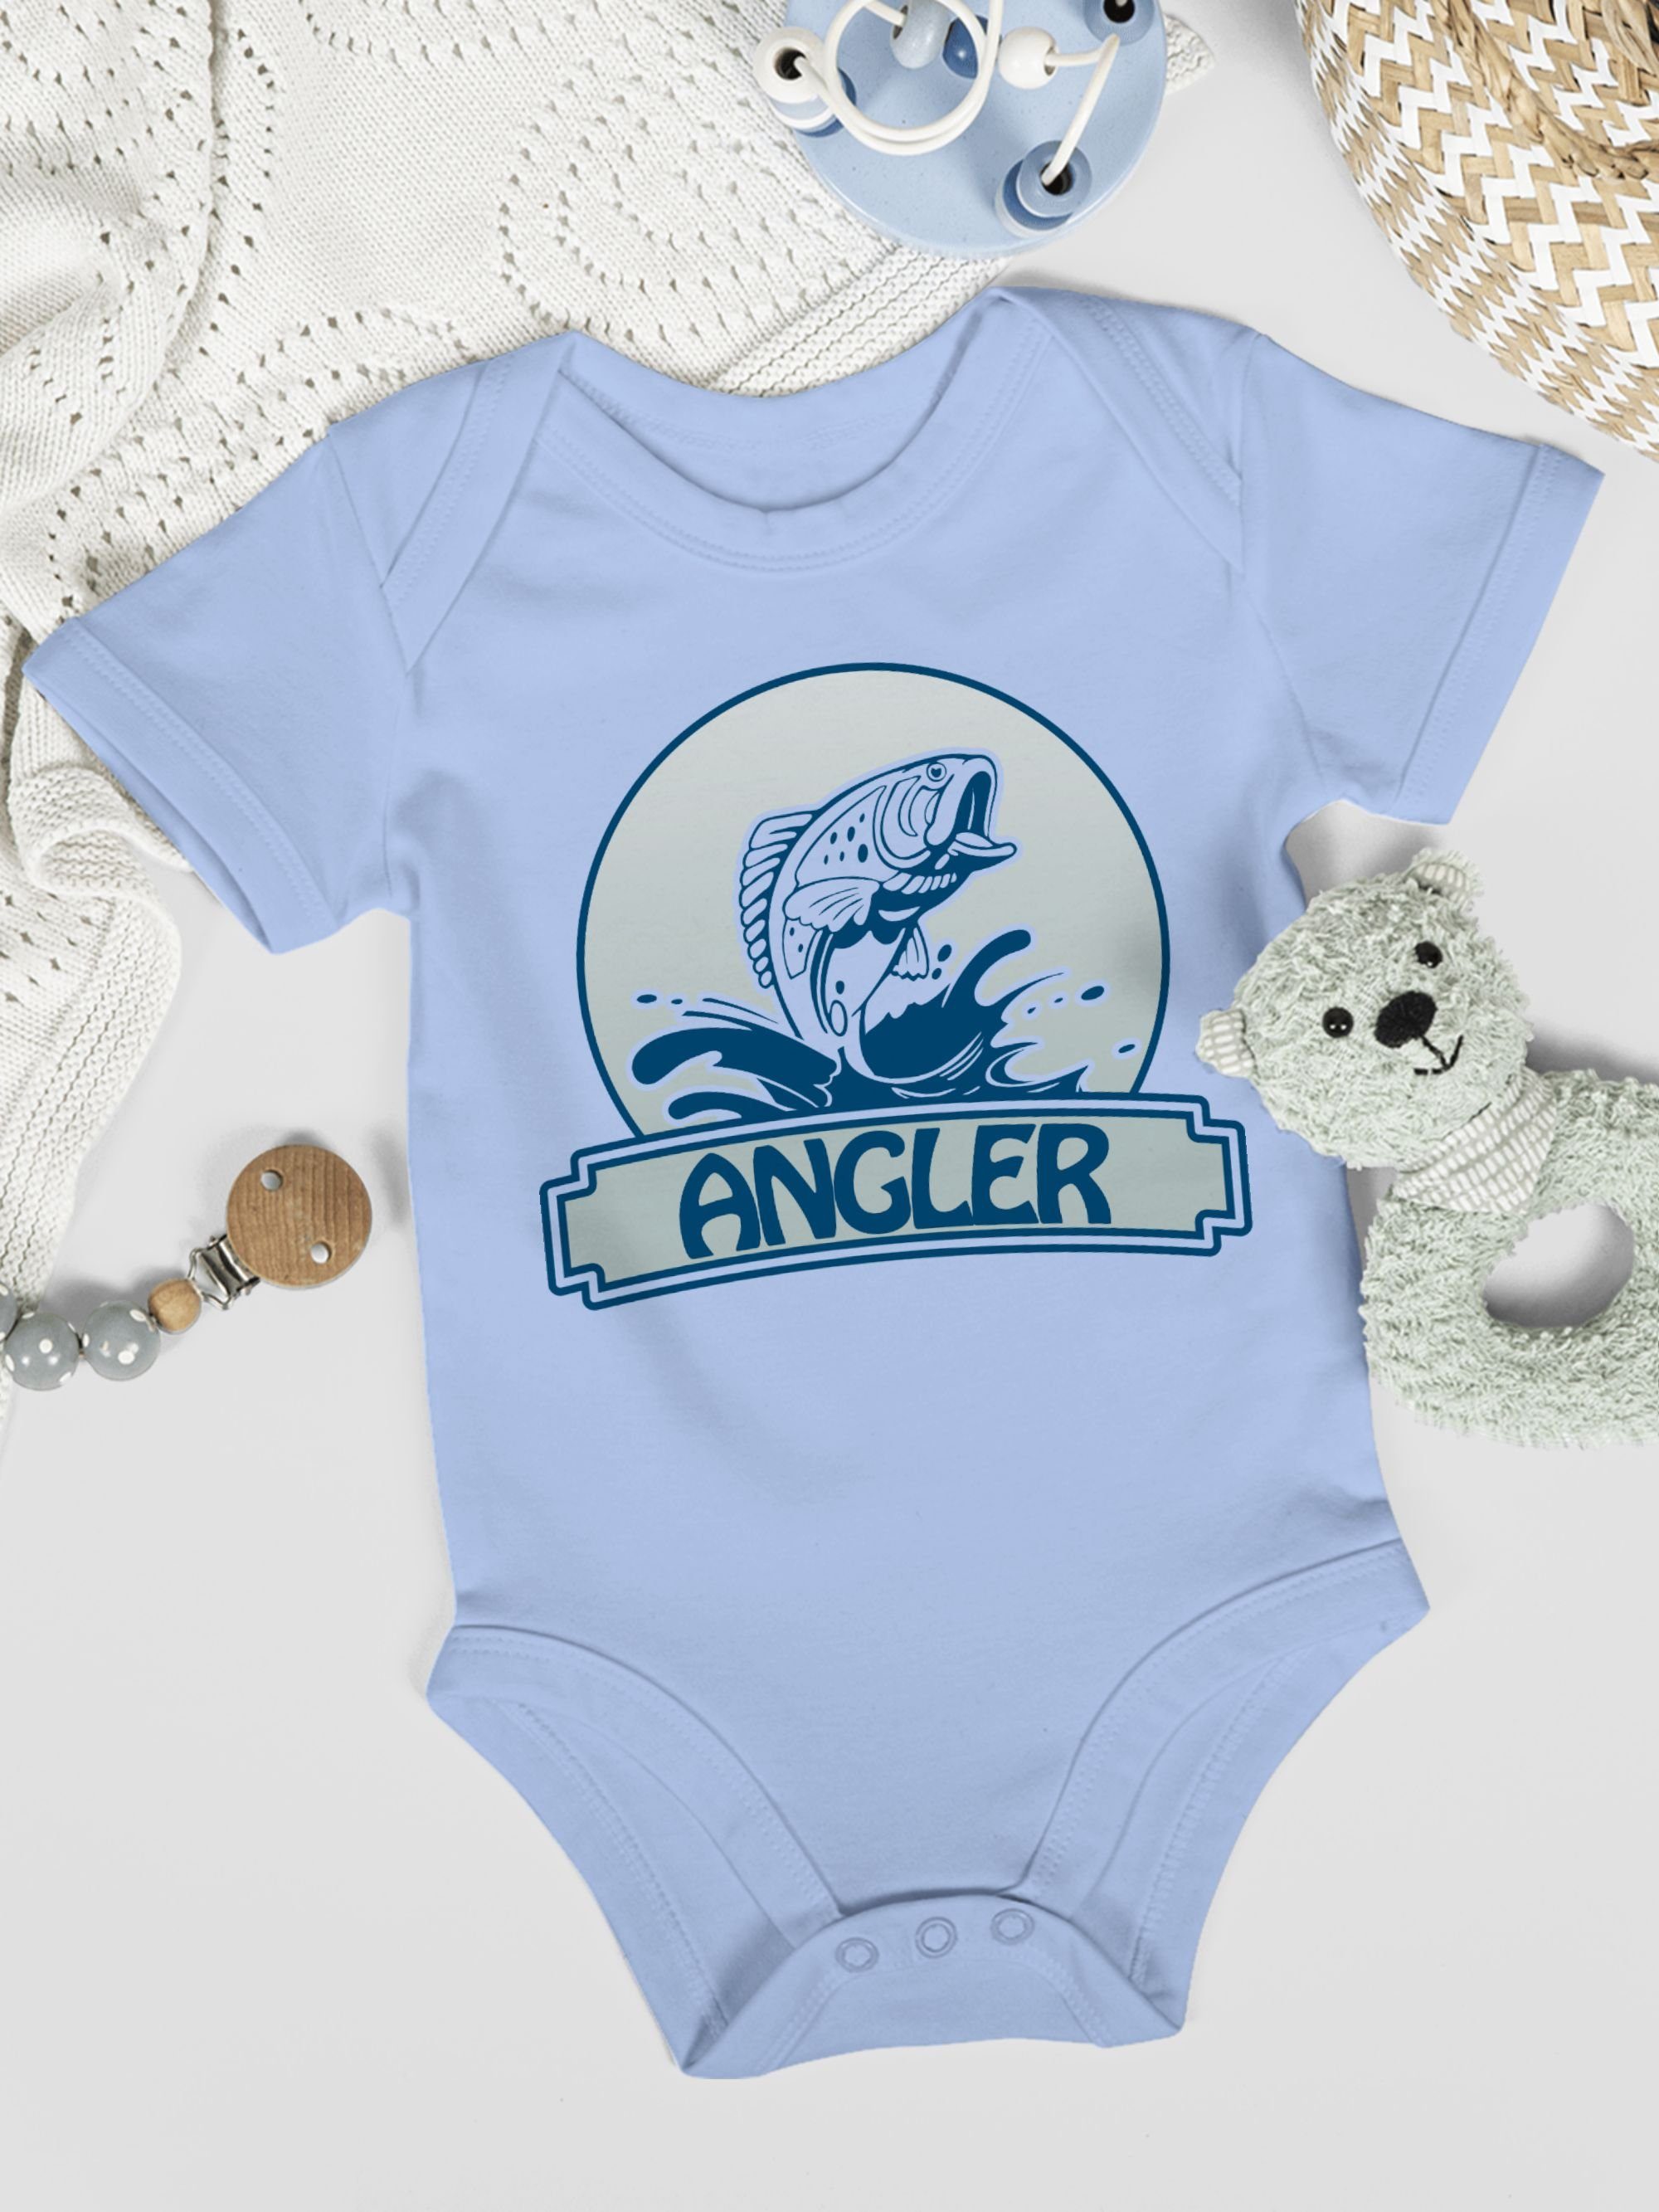 1 & Button Angler Sport Babyblau Shirtbody Shirtracer Bewegung Baby